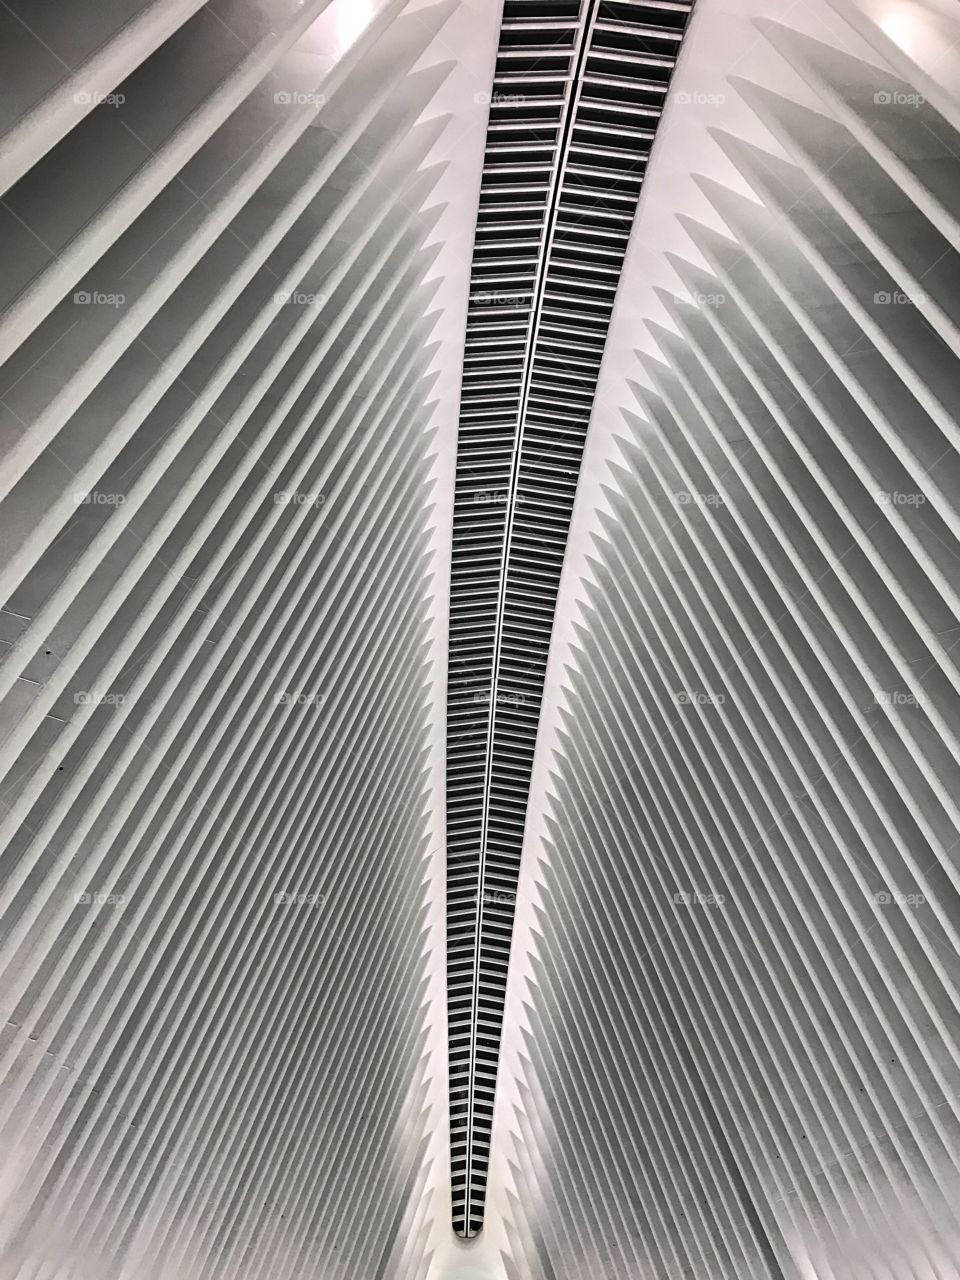 Inside the oculus, manhattan, New York